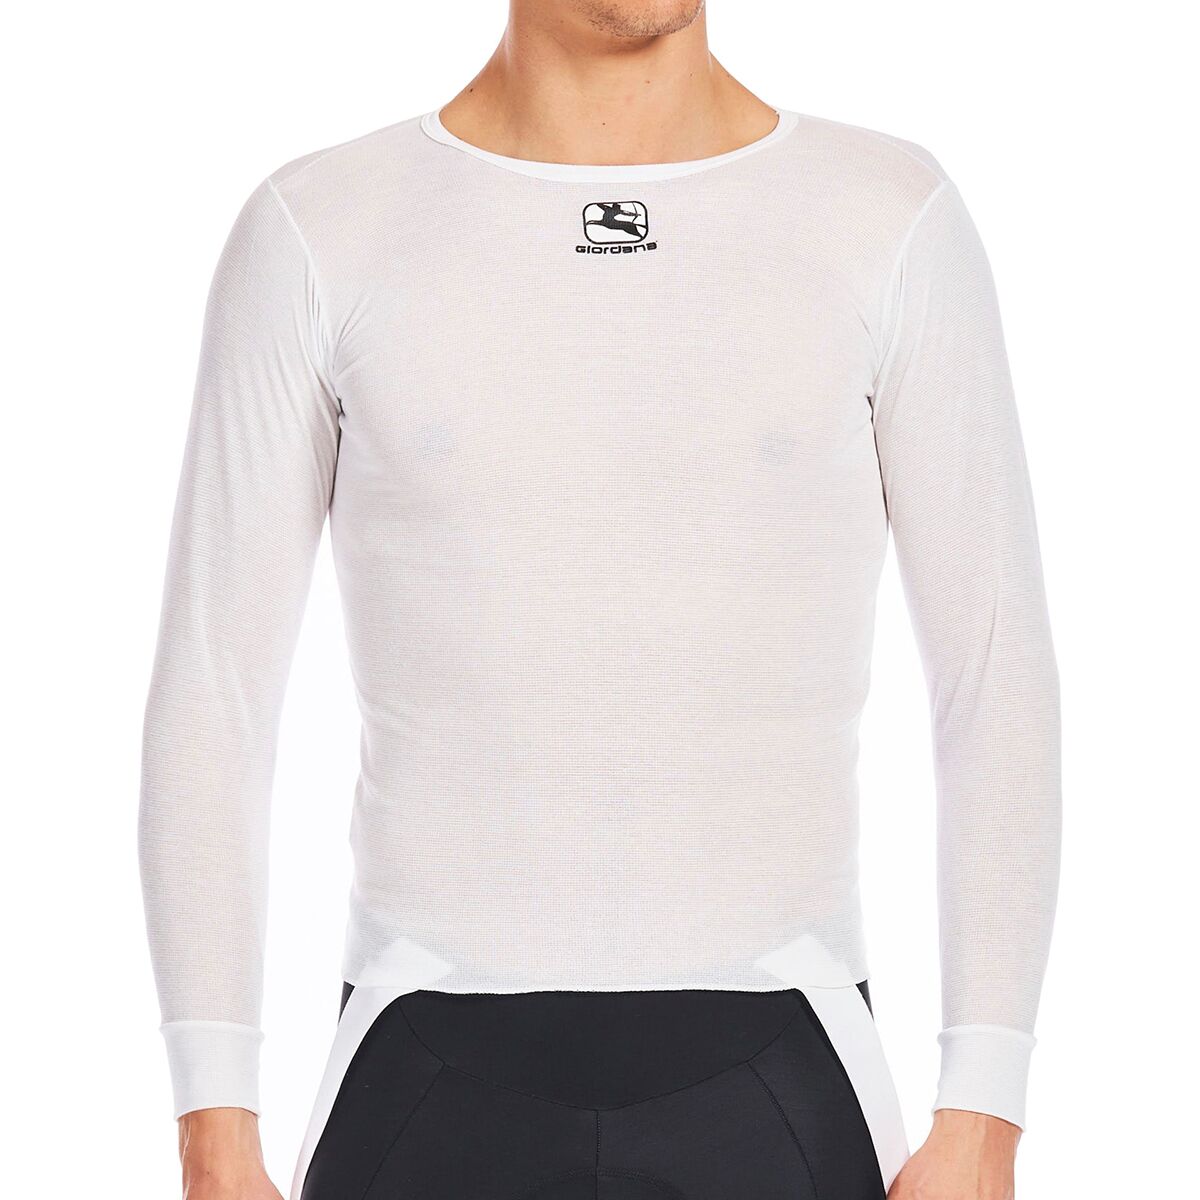 Giordana  Giordana Sport Long Sleeve Top White, X-Large - Men's